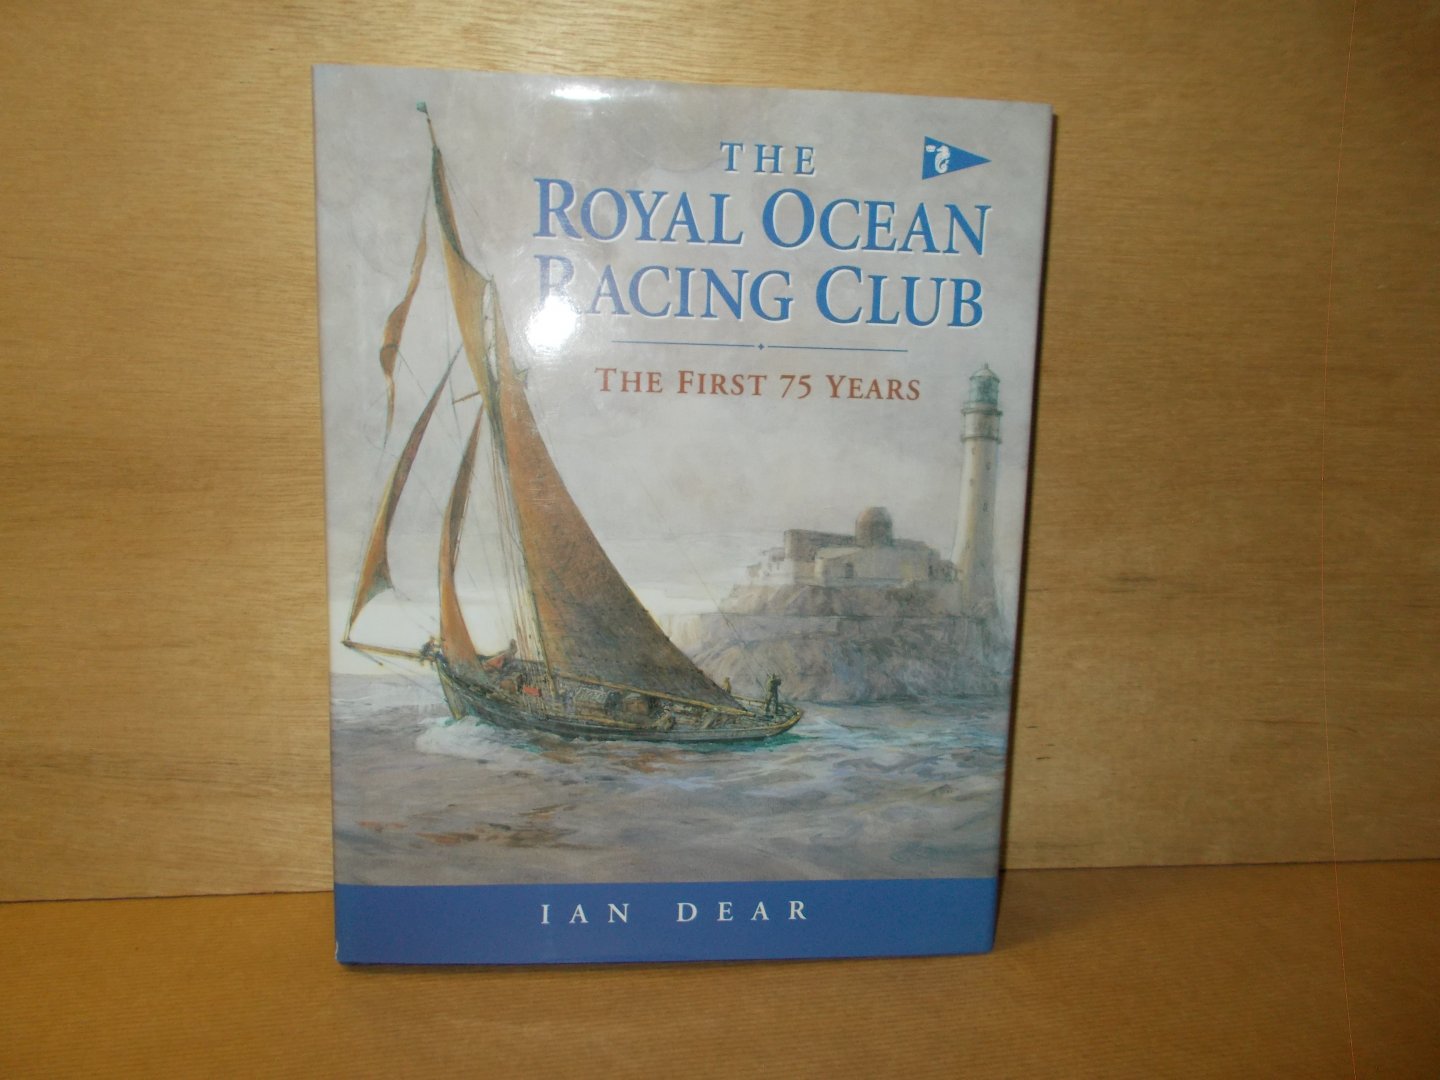 Dear, Ian - The royal ocean racing club the first 75 years